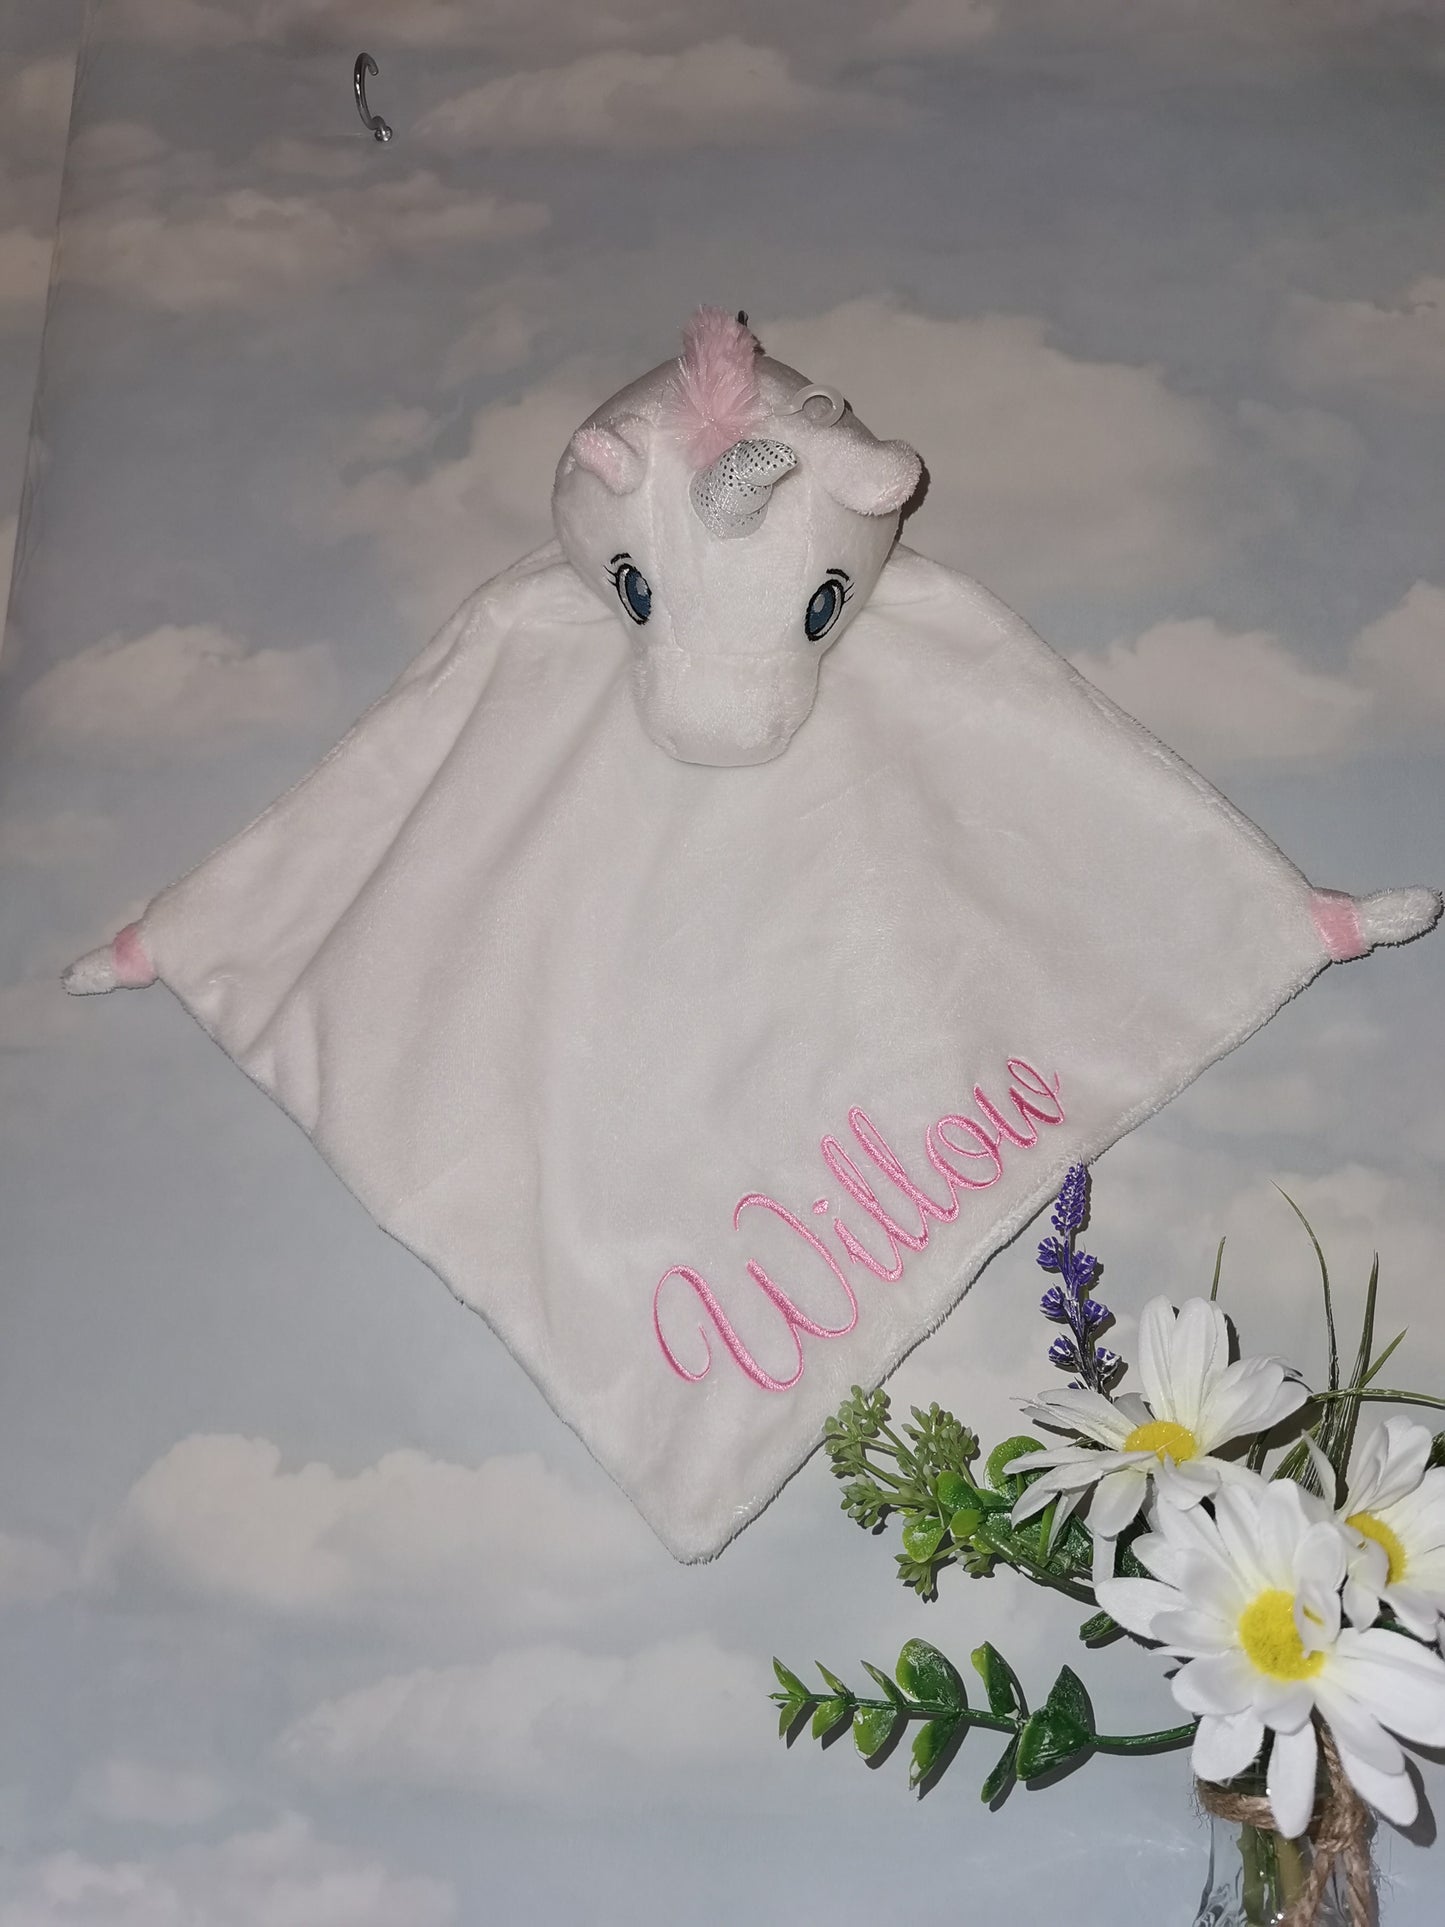 Personalised White cubbies Unicorn comforter